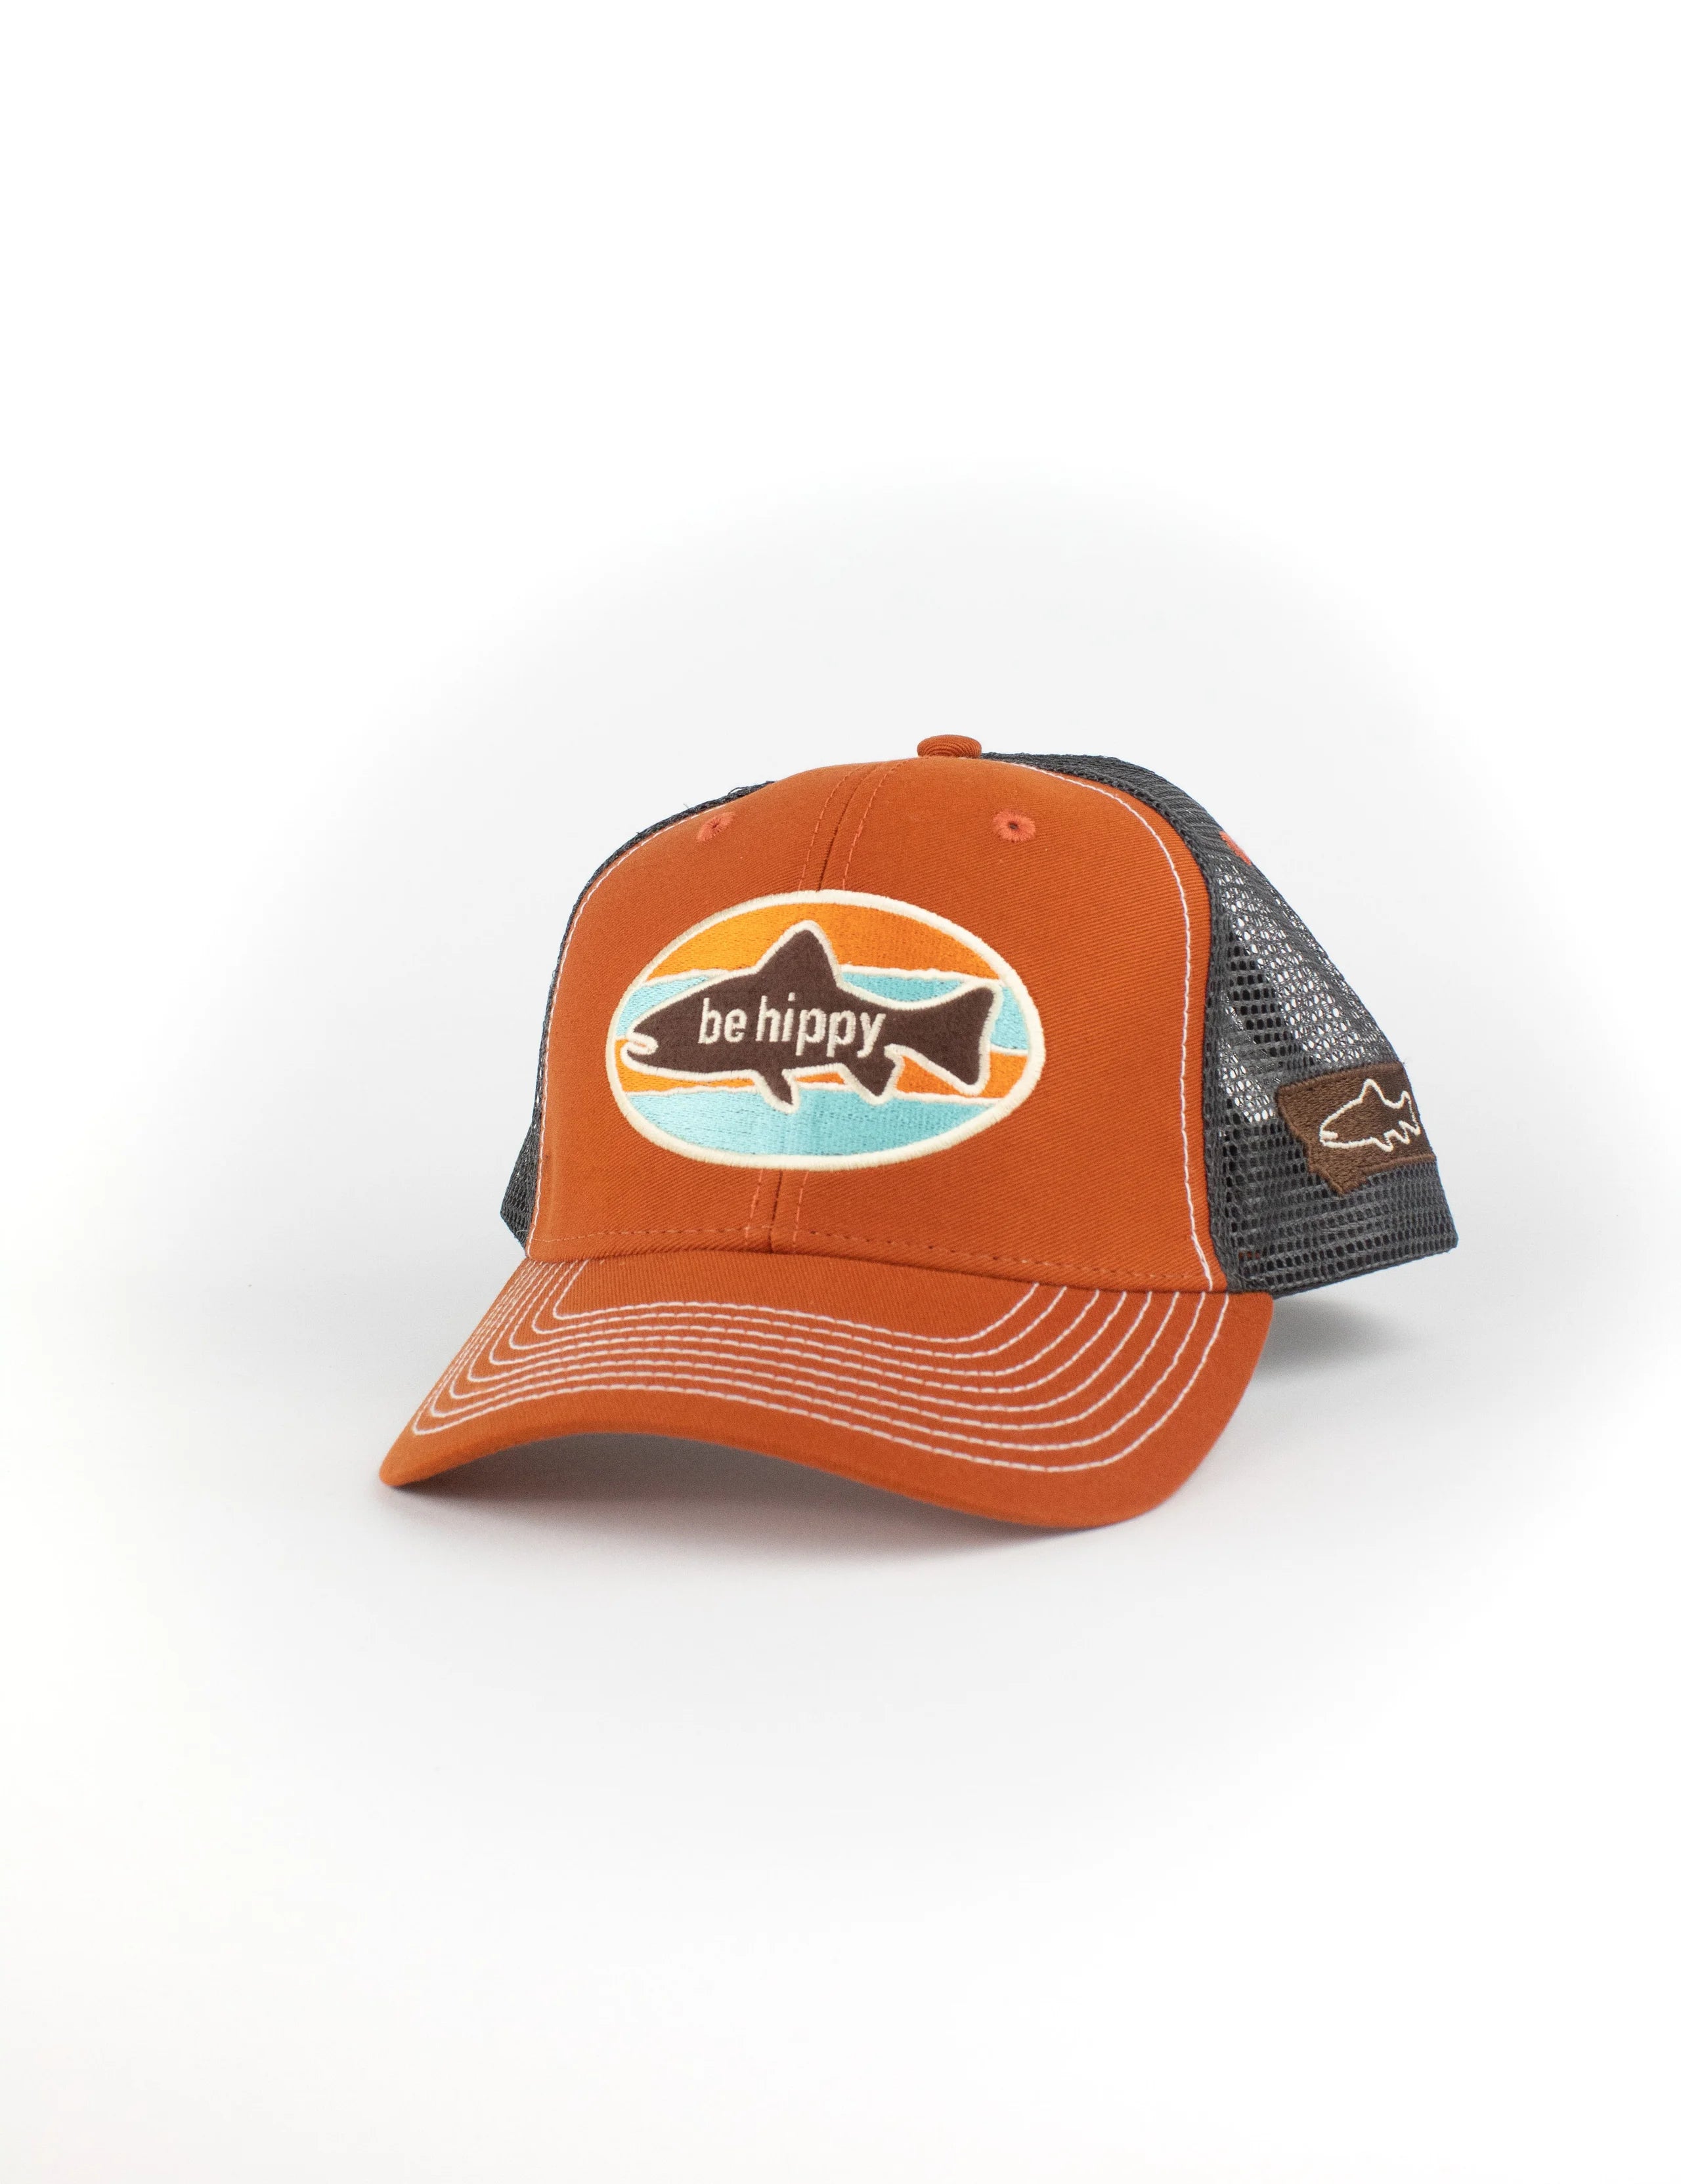 Be Hippy Fish Logo Trucker Hat - Montana Flag Orange with Gray Mesh